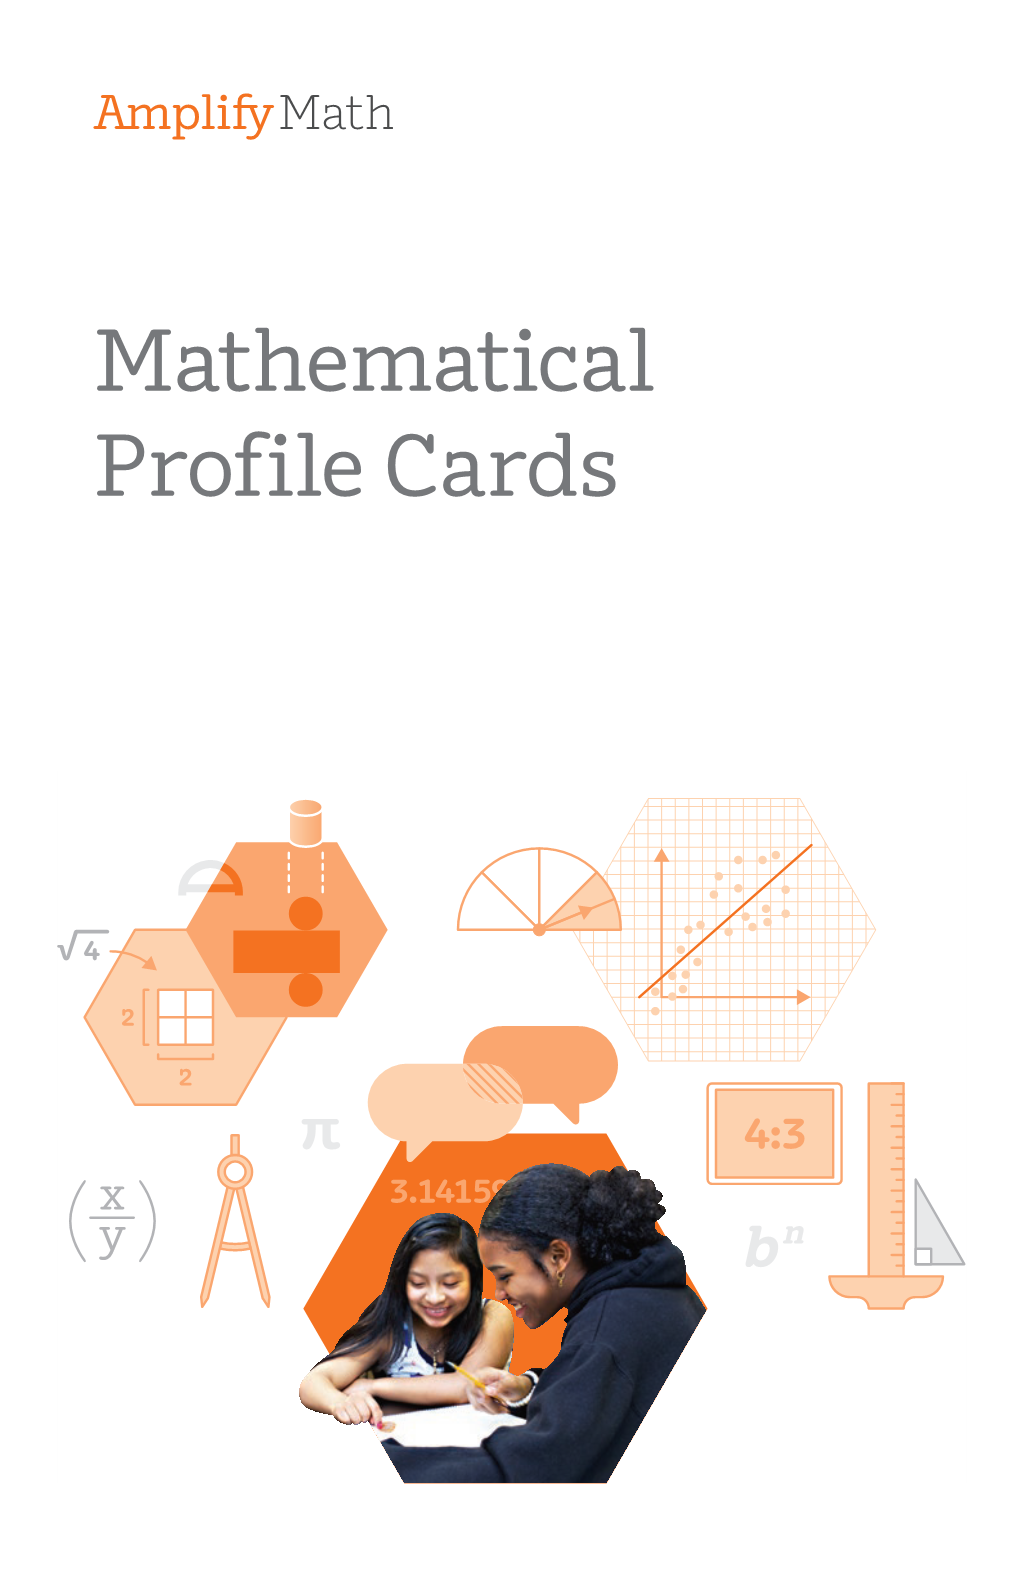 Amplify Math: Mathematical Profile Cards